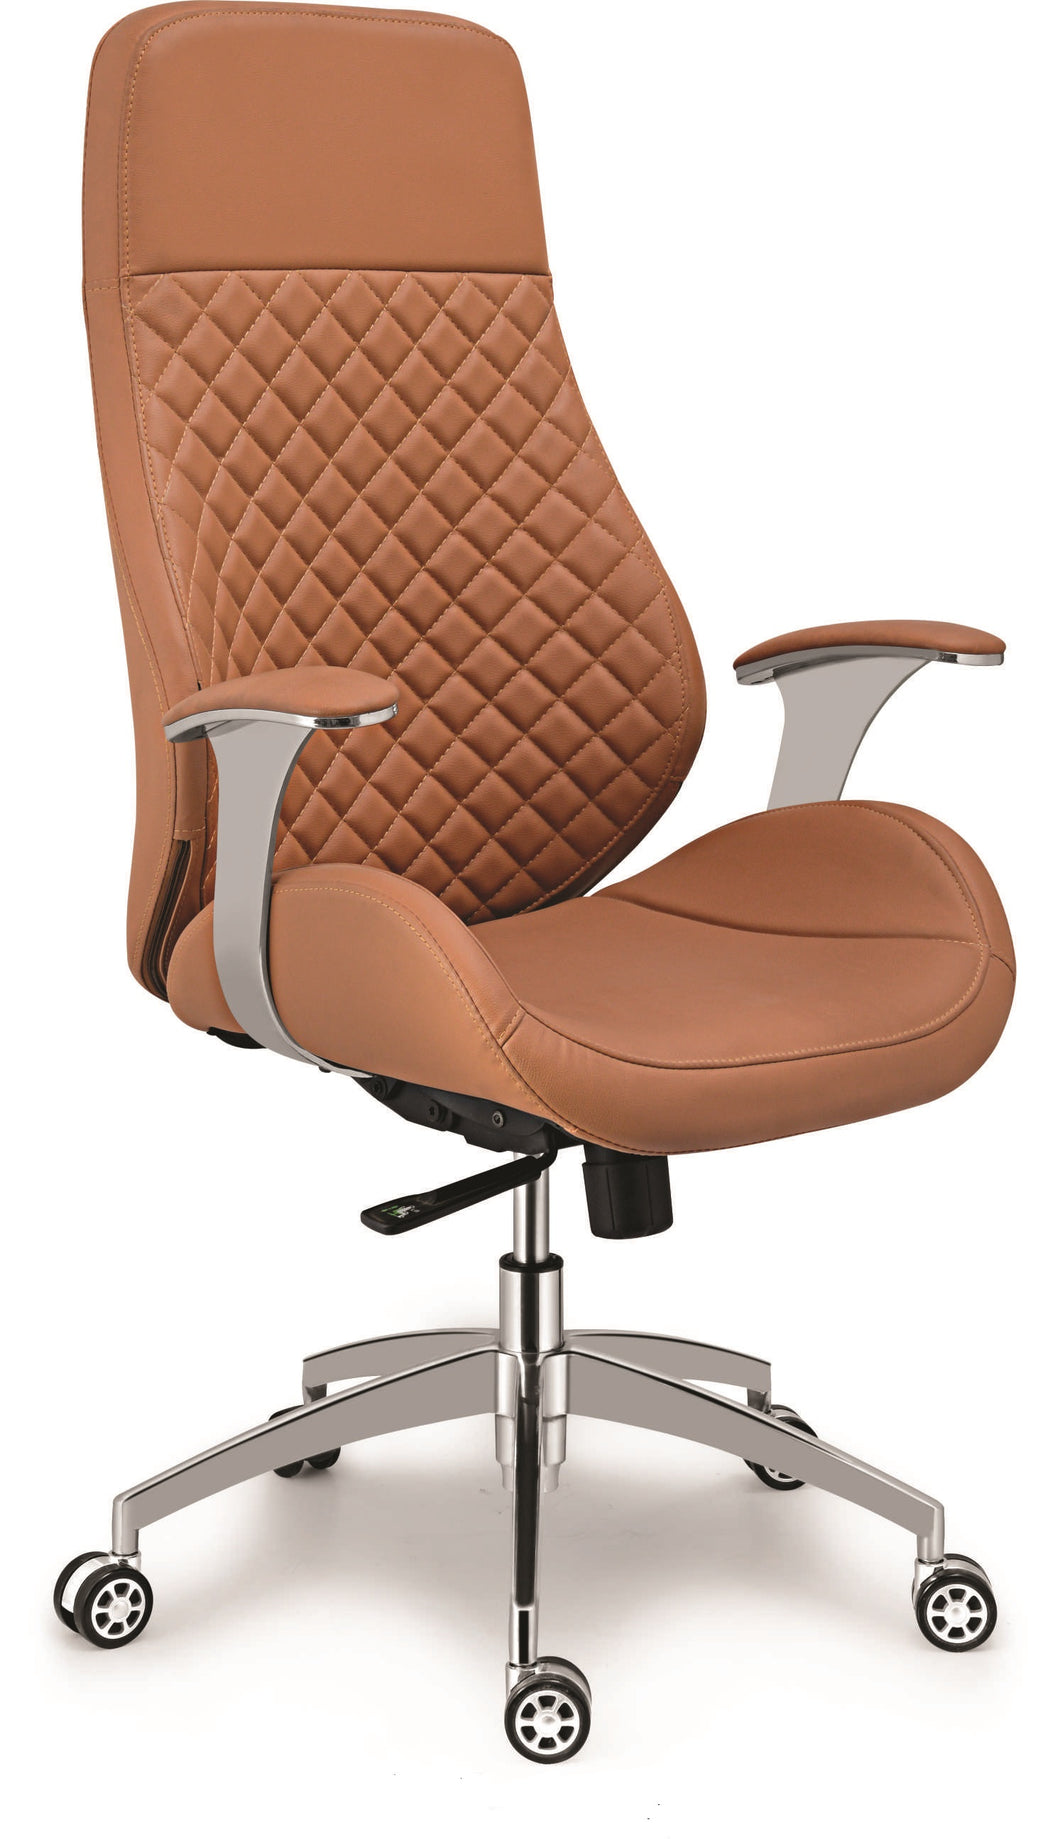 FC112- Executive High Back Chair